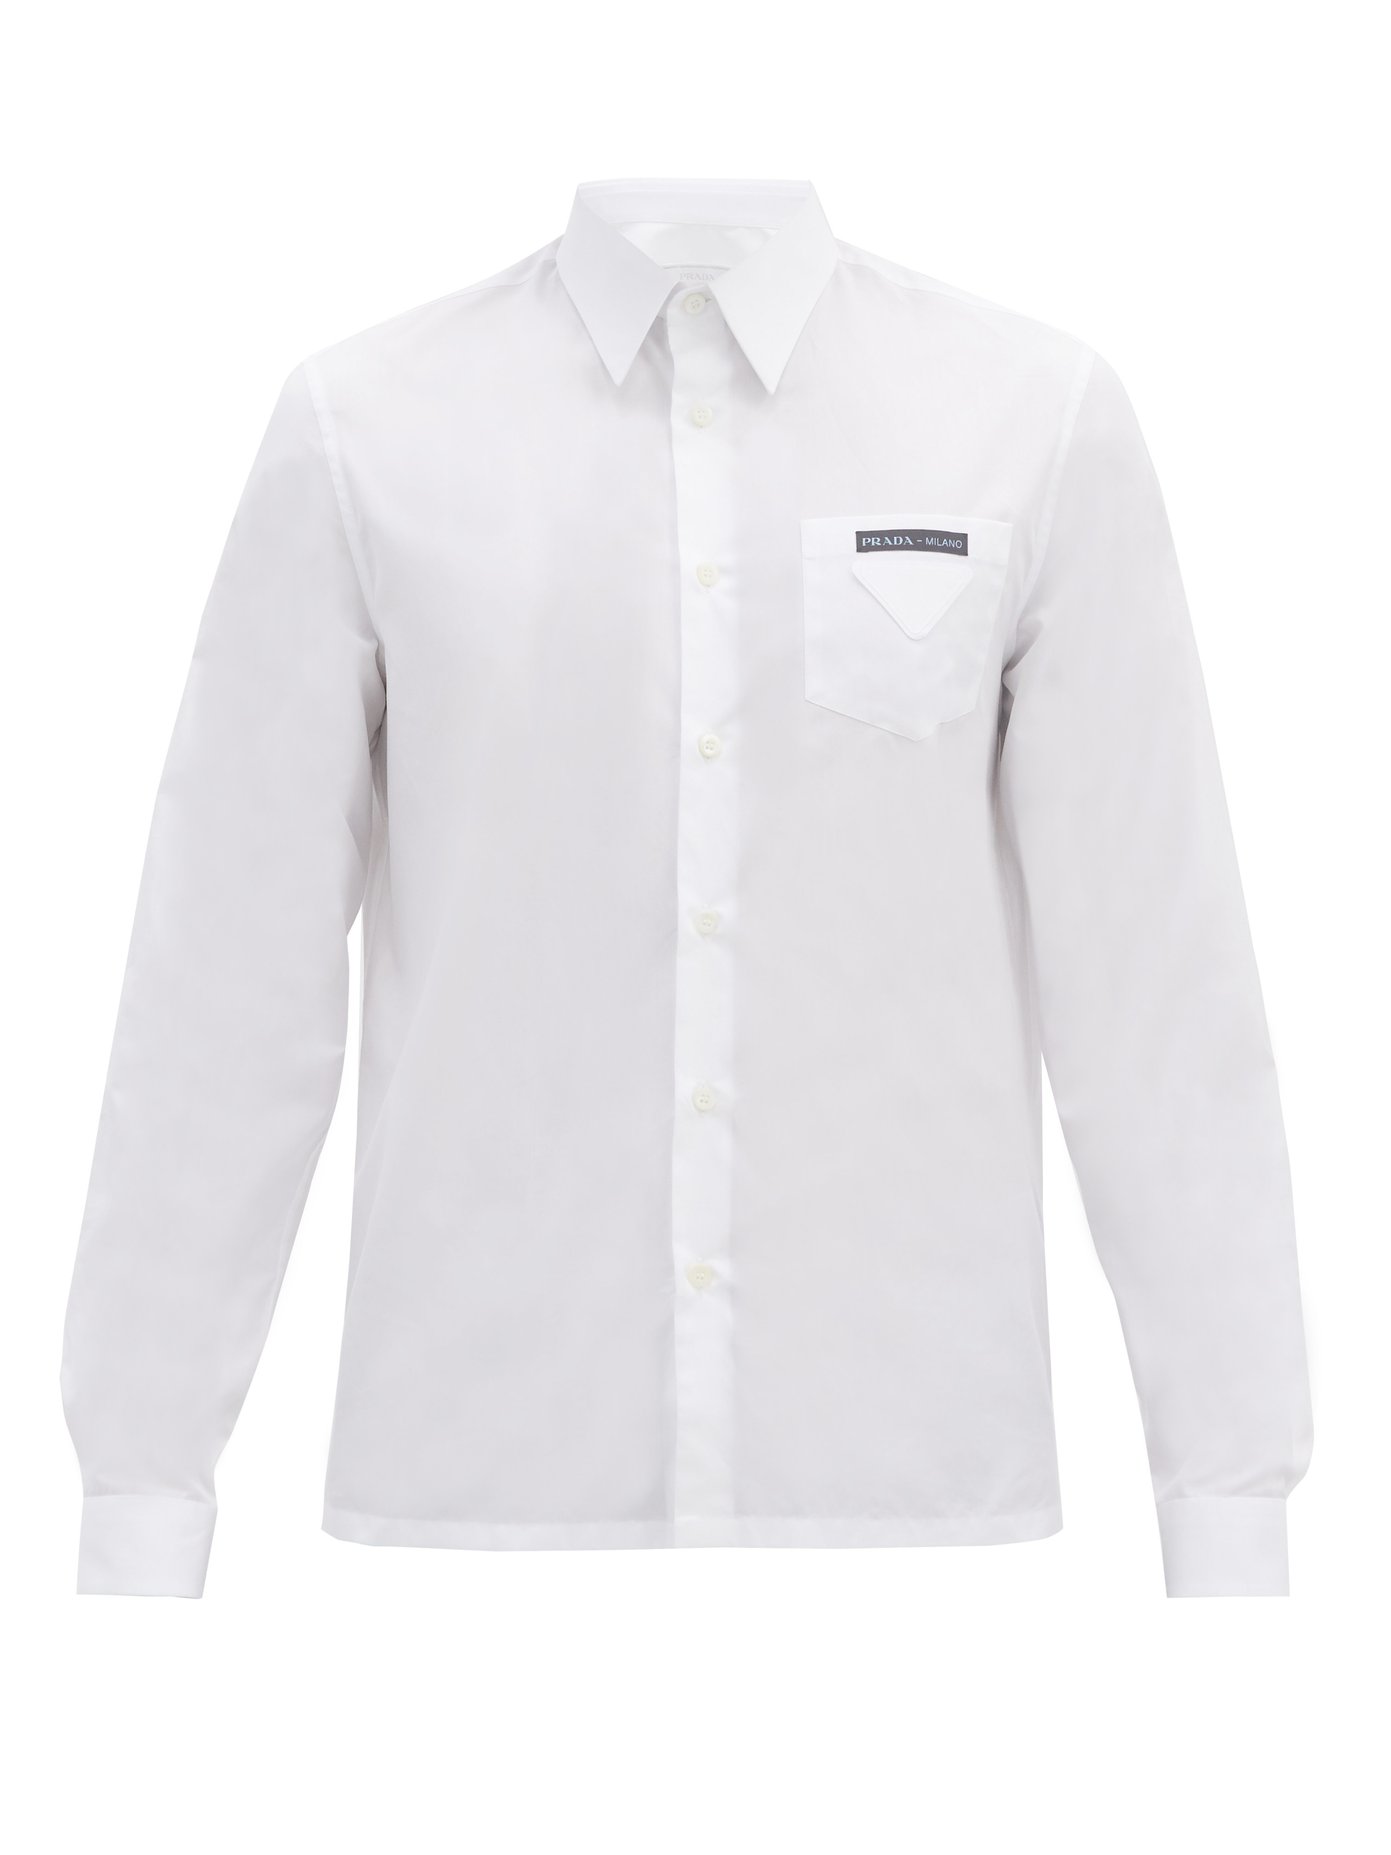 prada button shirt